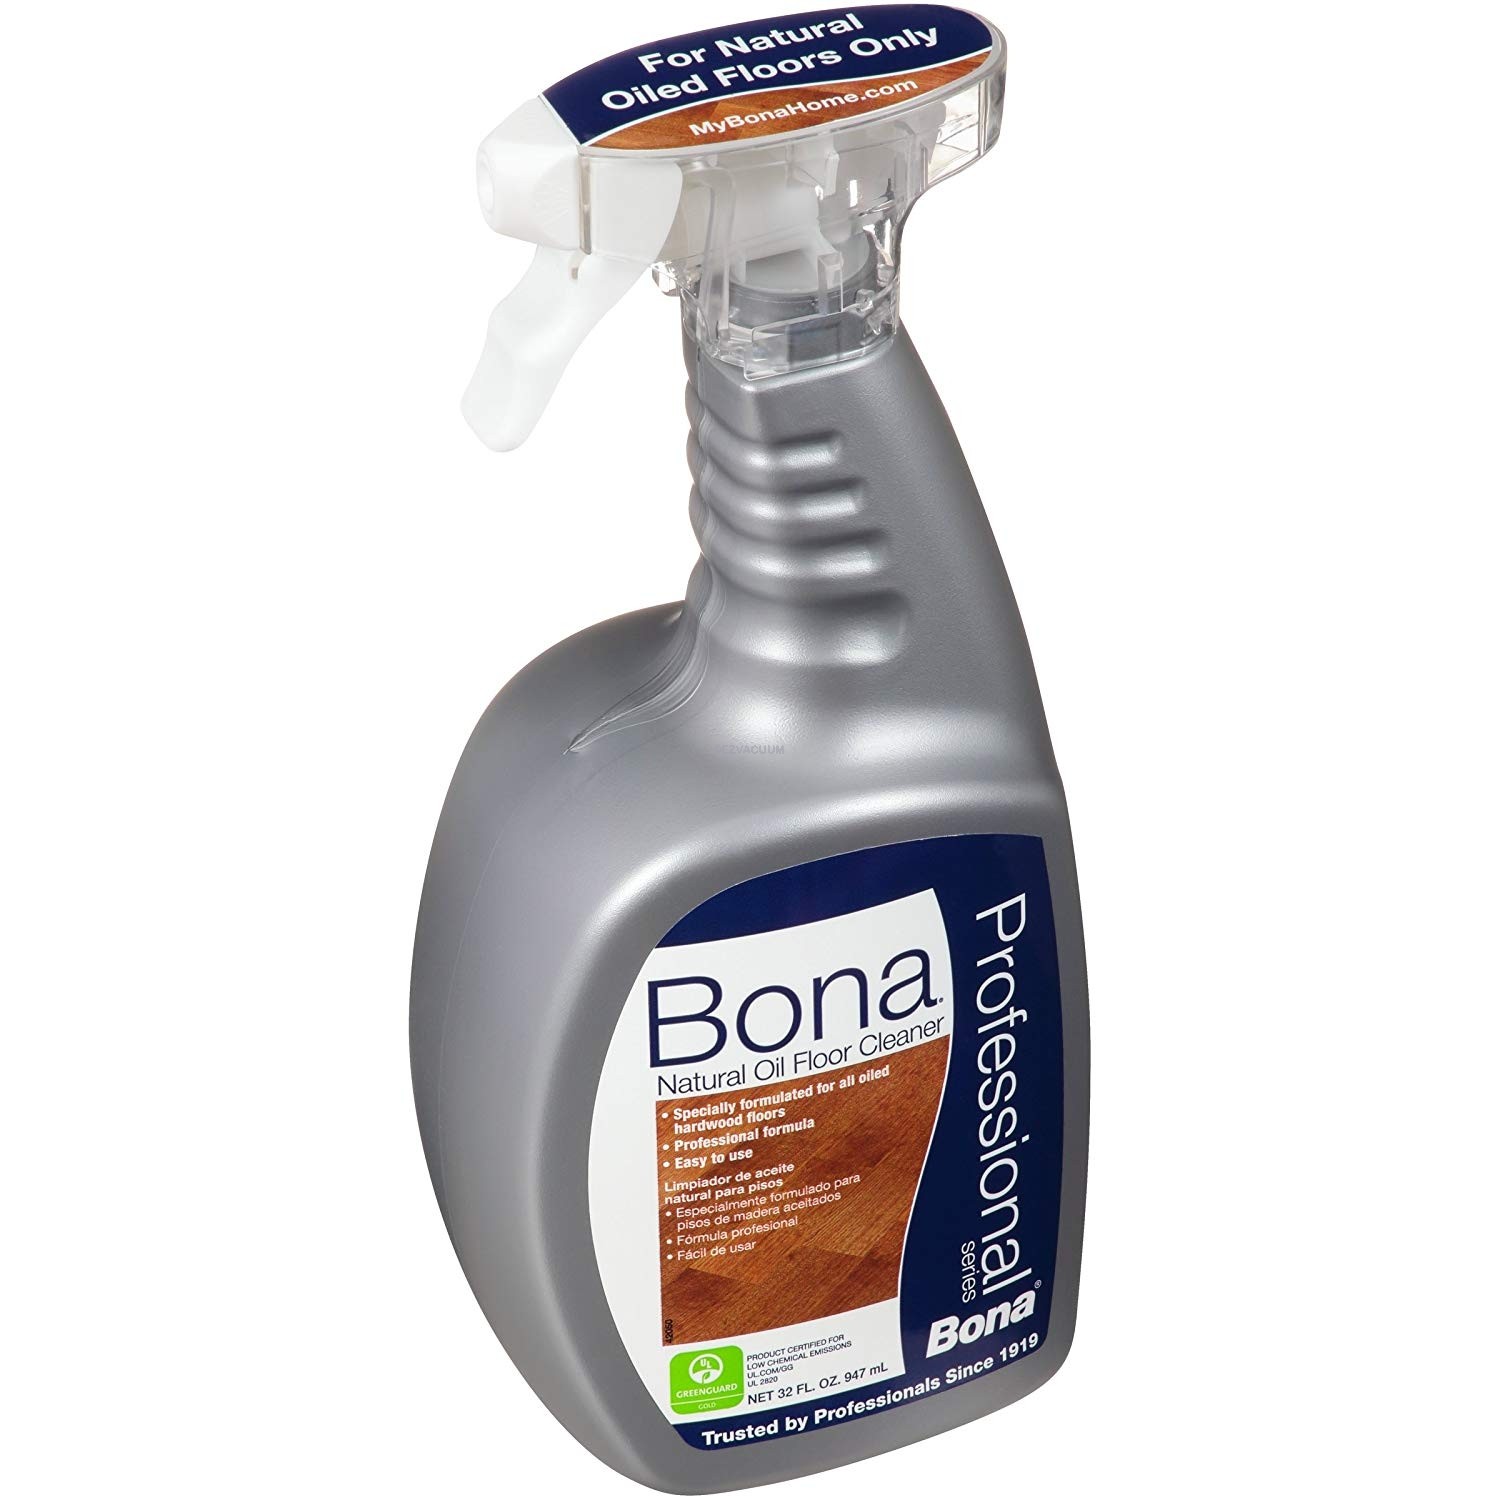 Bona Professional Series Natural Oil, Bona Professional Hardwood Floor Cleaner